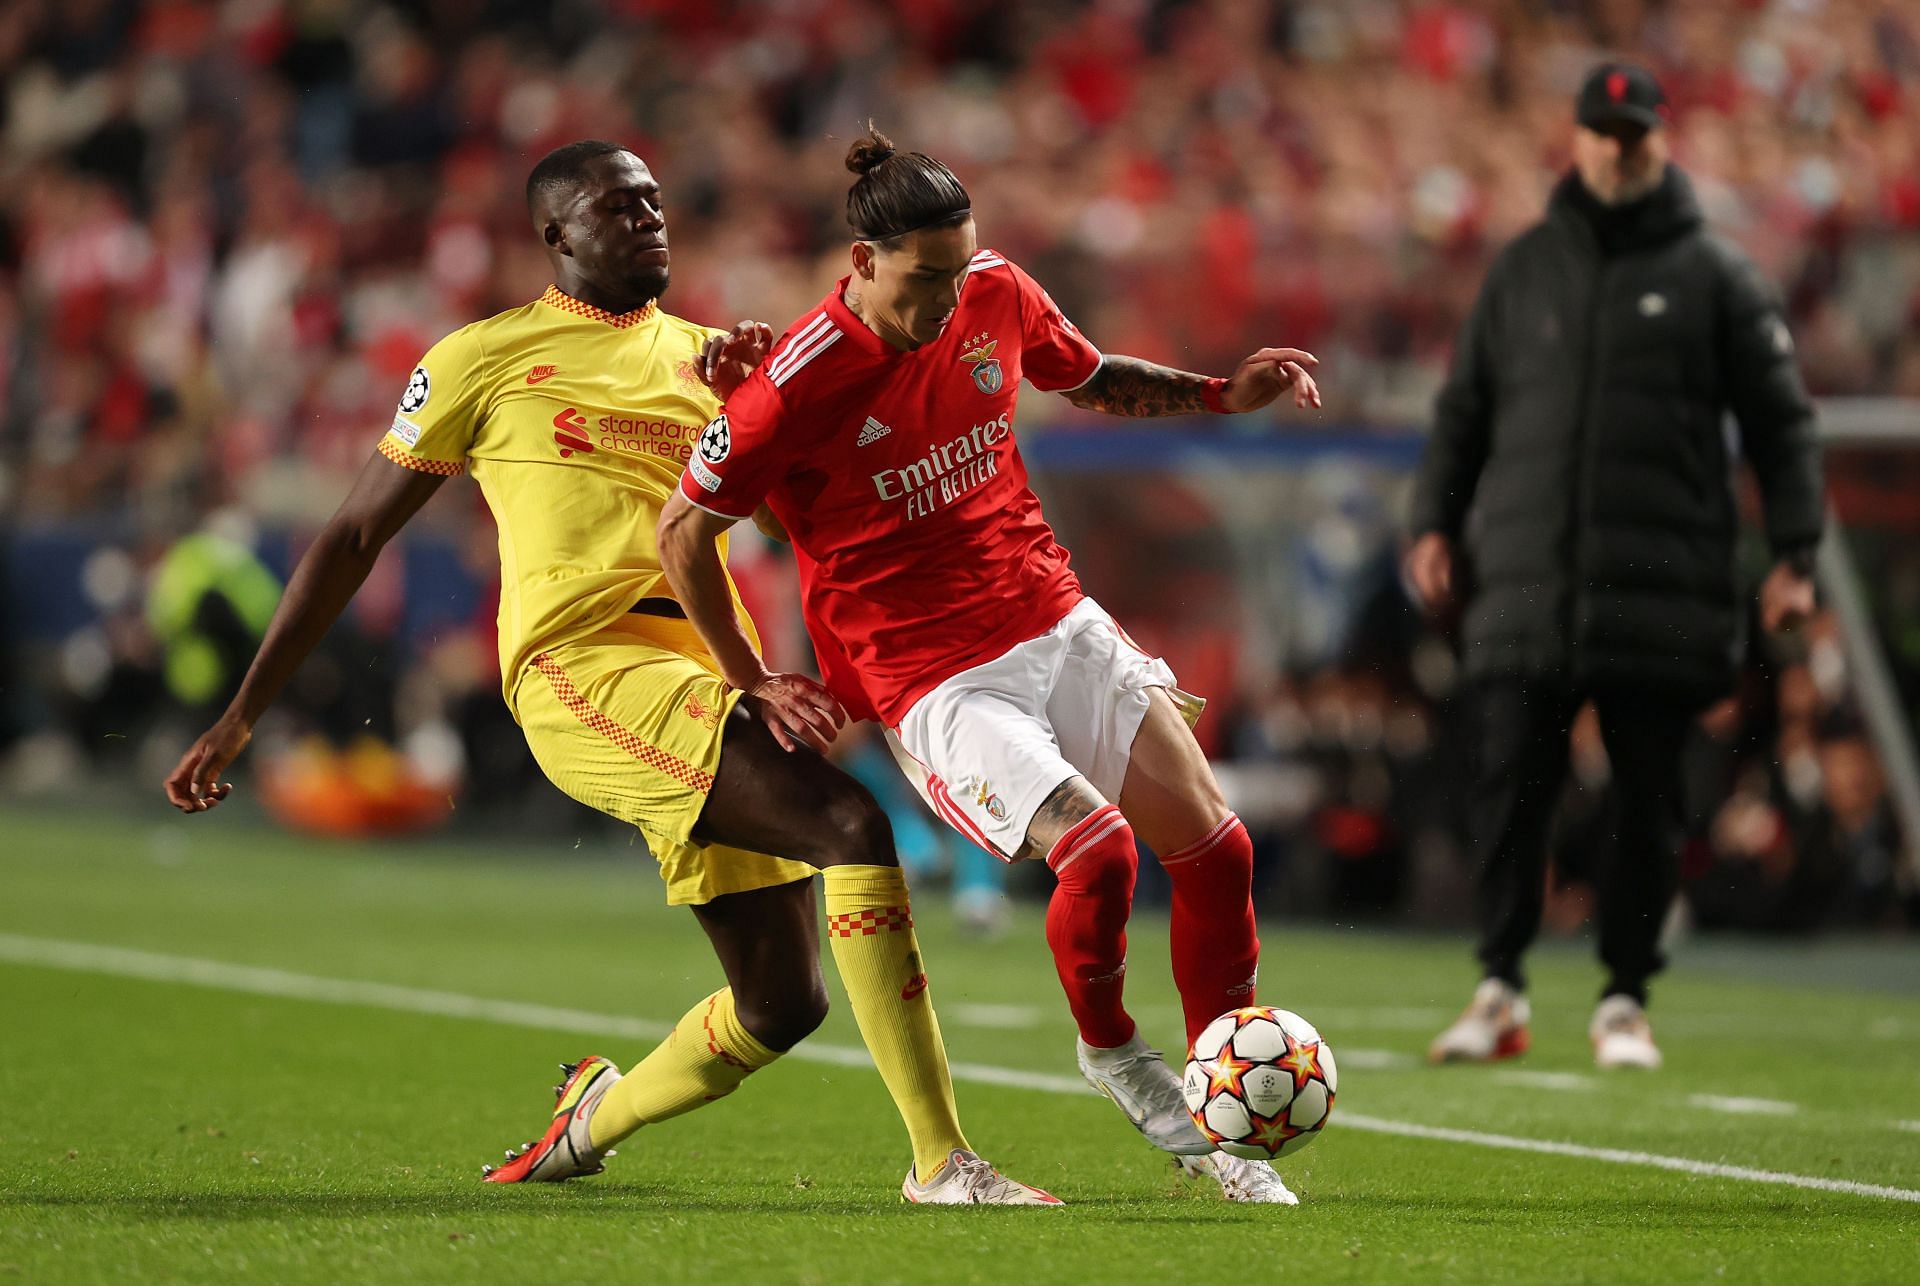 Darwin Nunez impressed against Liverpool